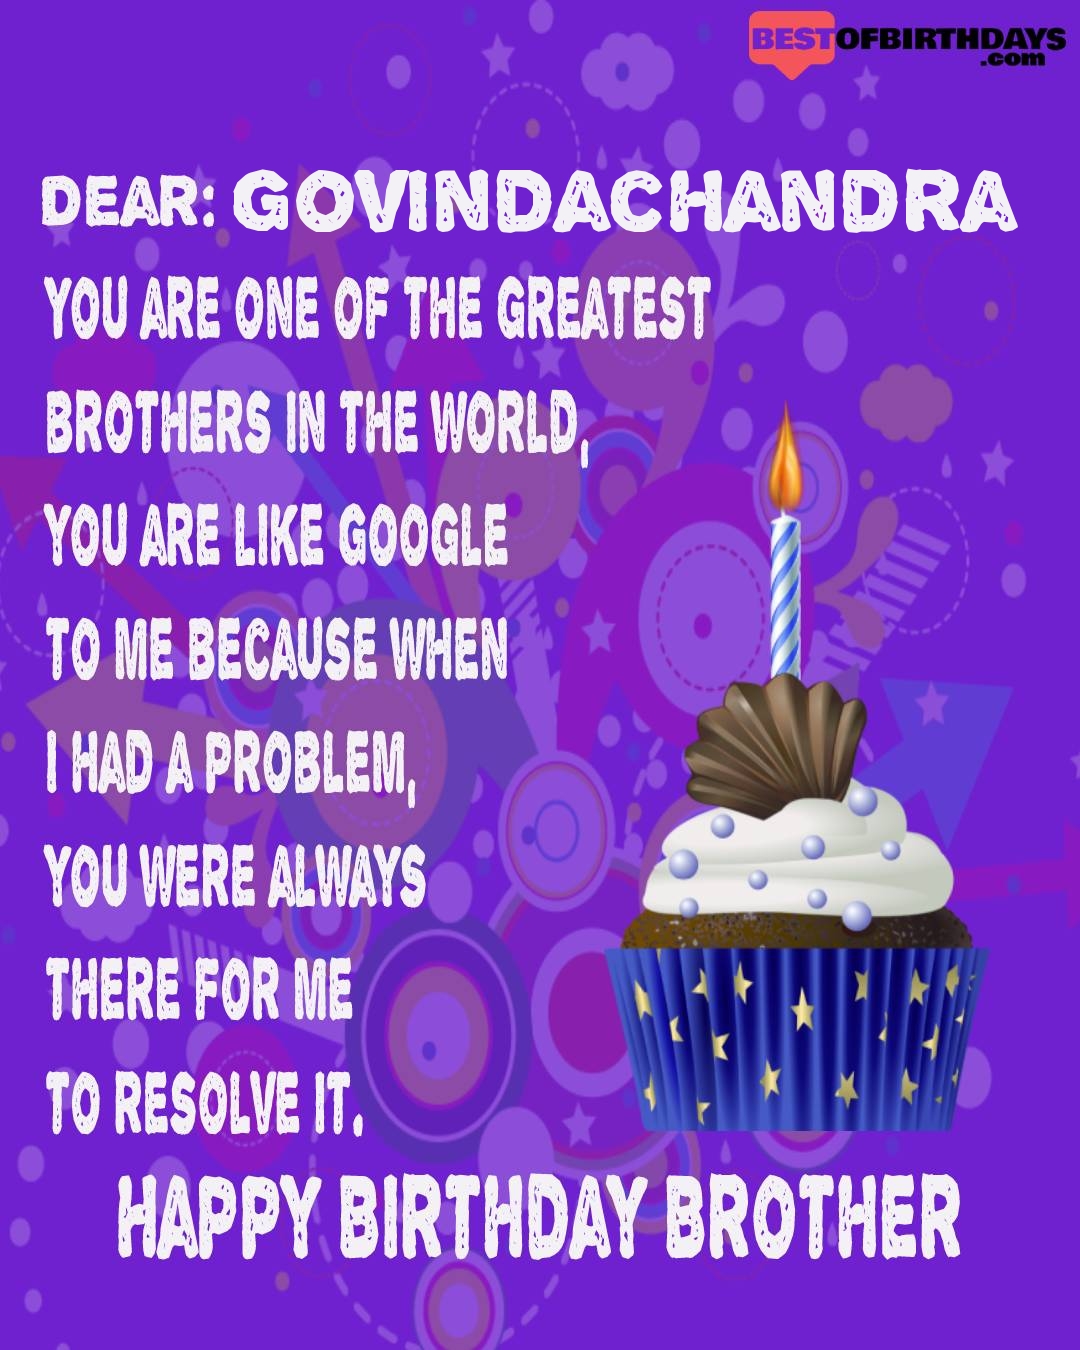 Happy birthday govindachandra bhai brother bro